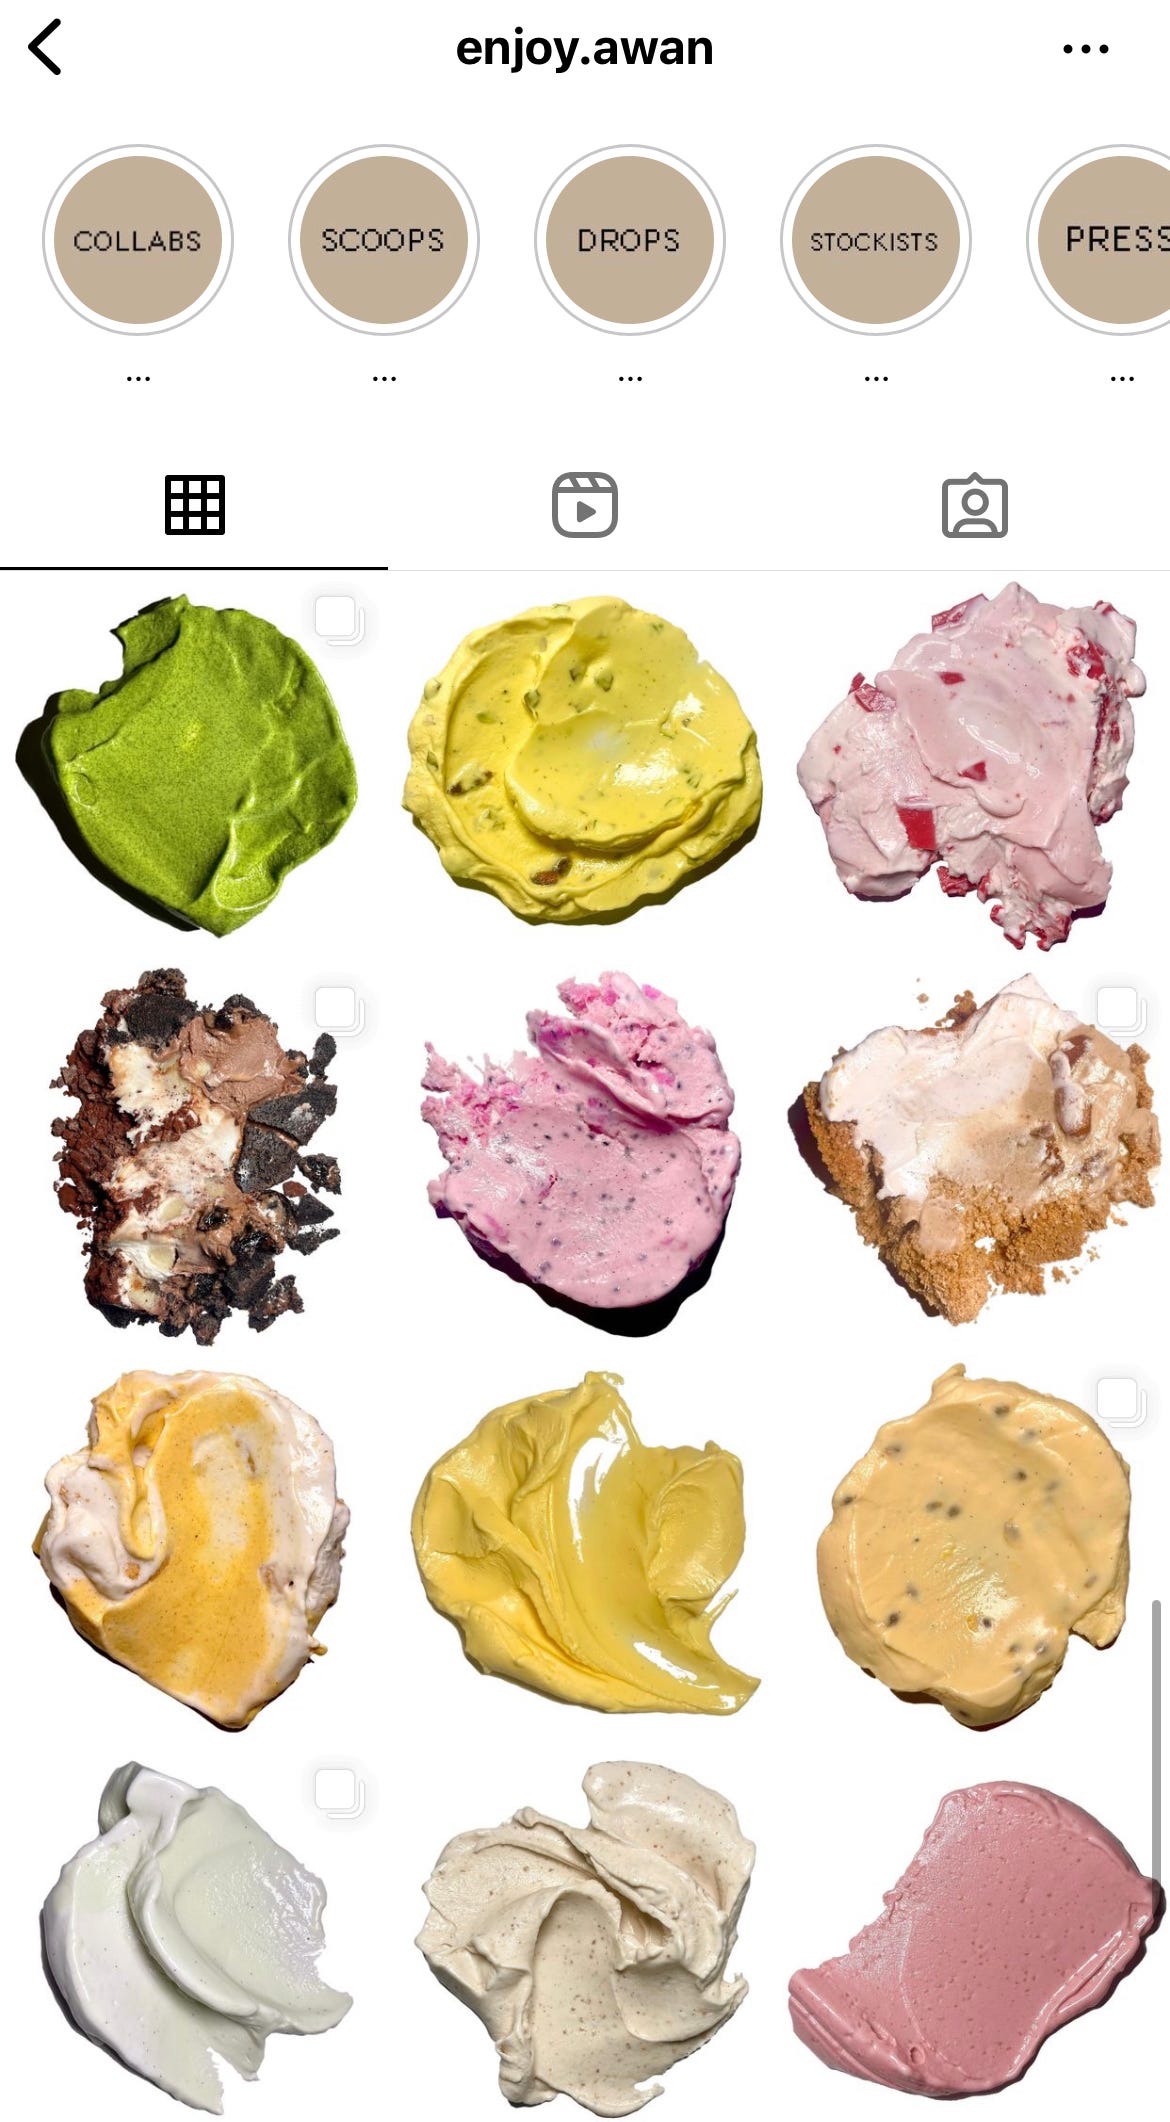 Instagram grid where each post has a silo'd ice cream scoop